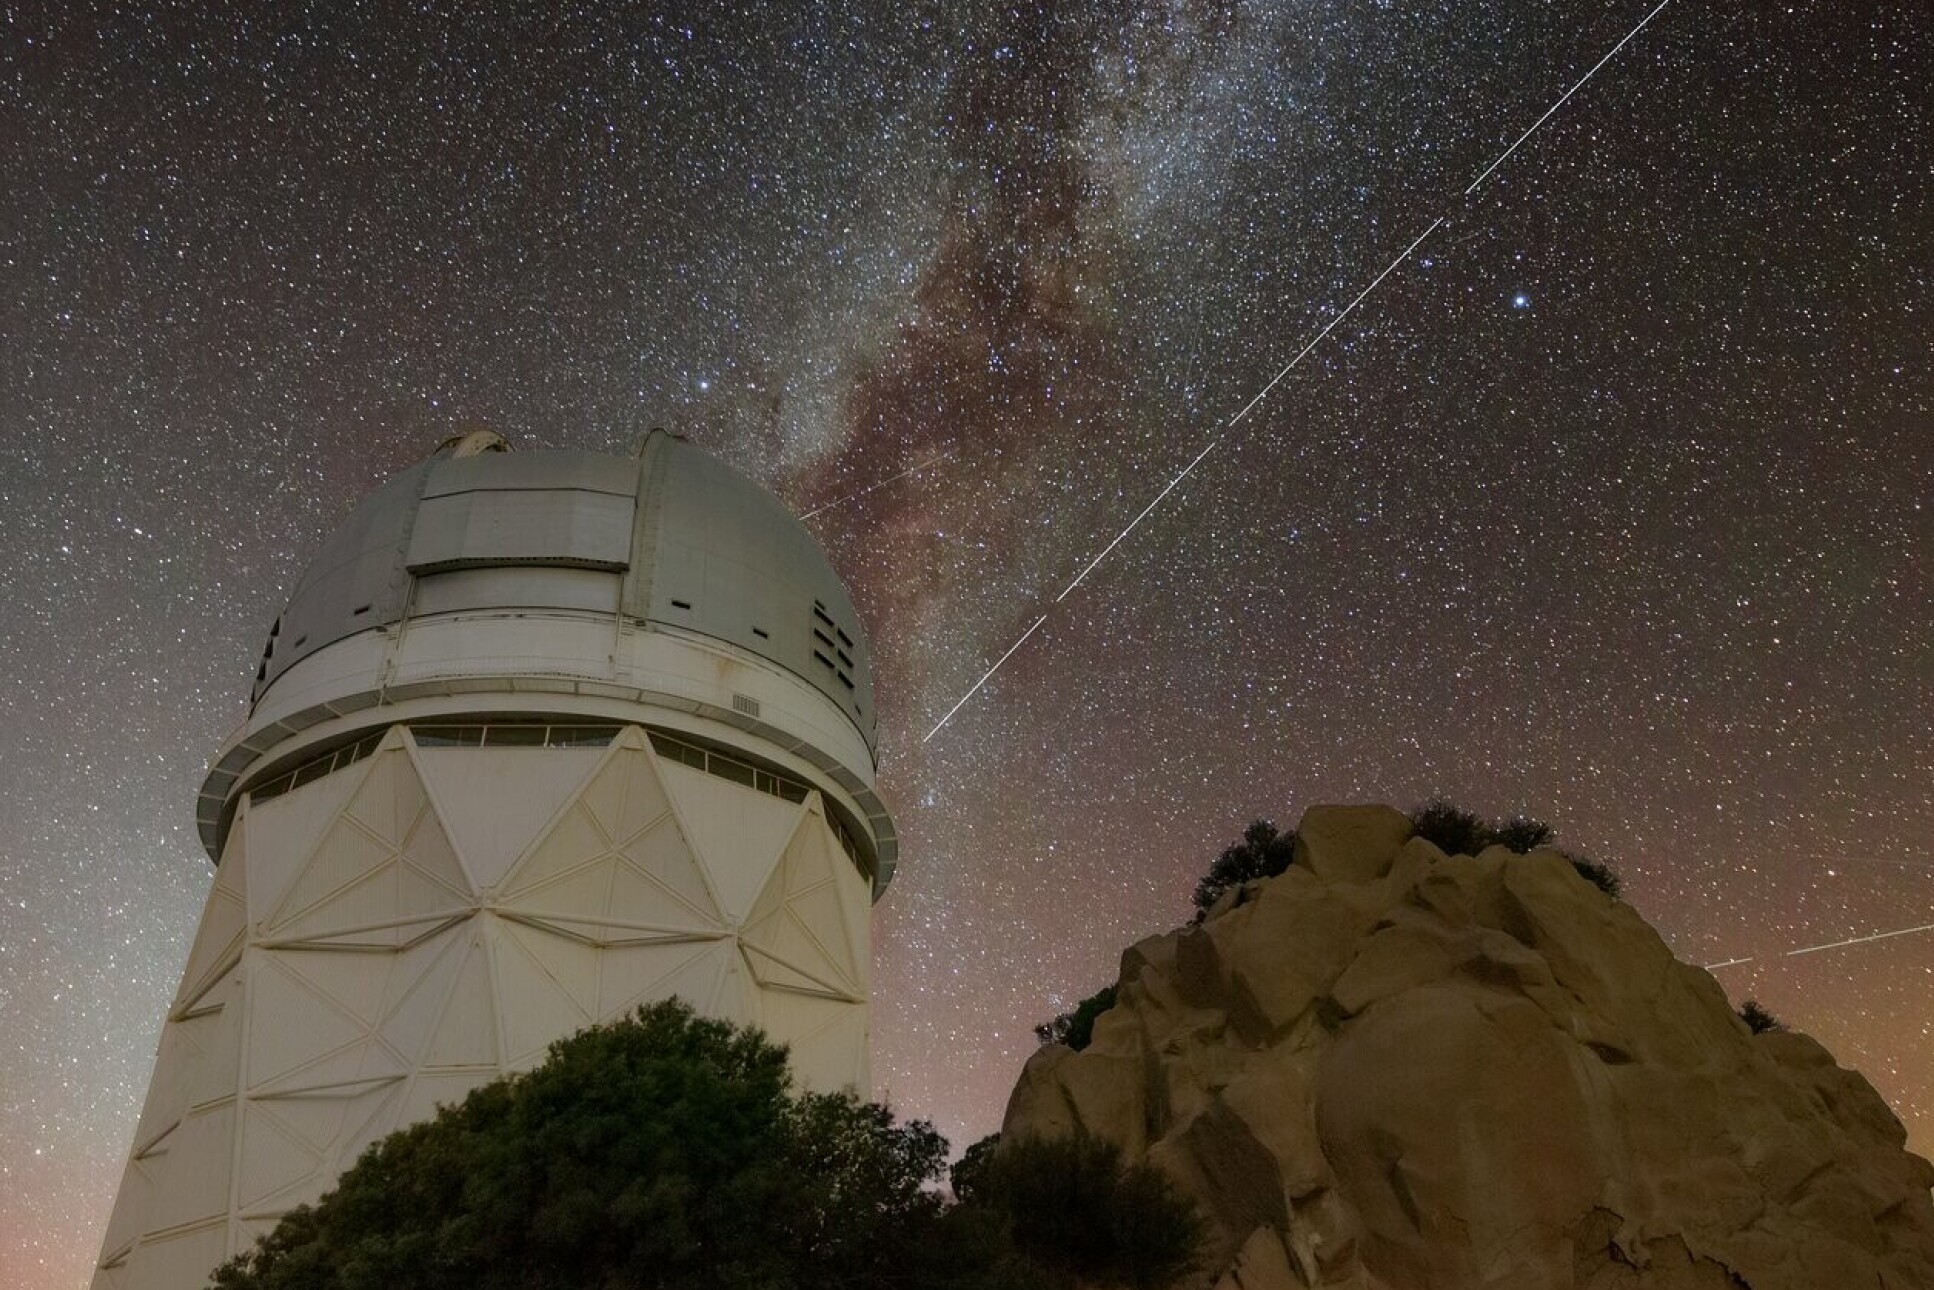 Bright streak across the night sky behind a large telescope